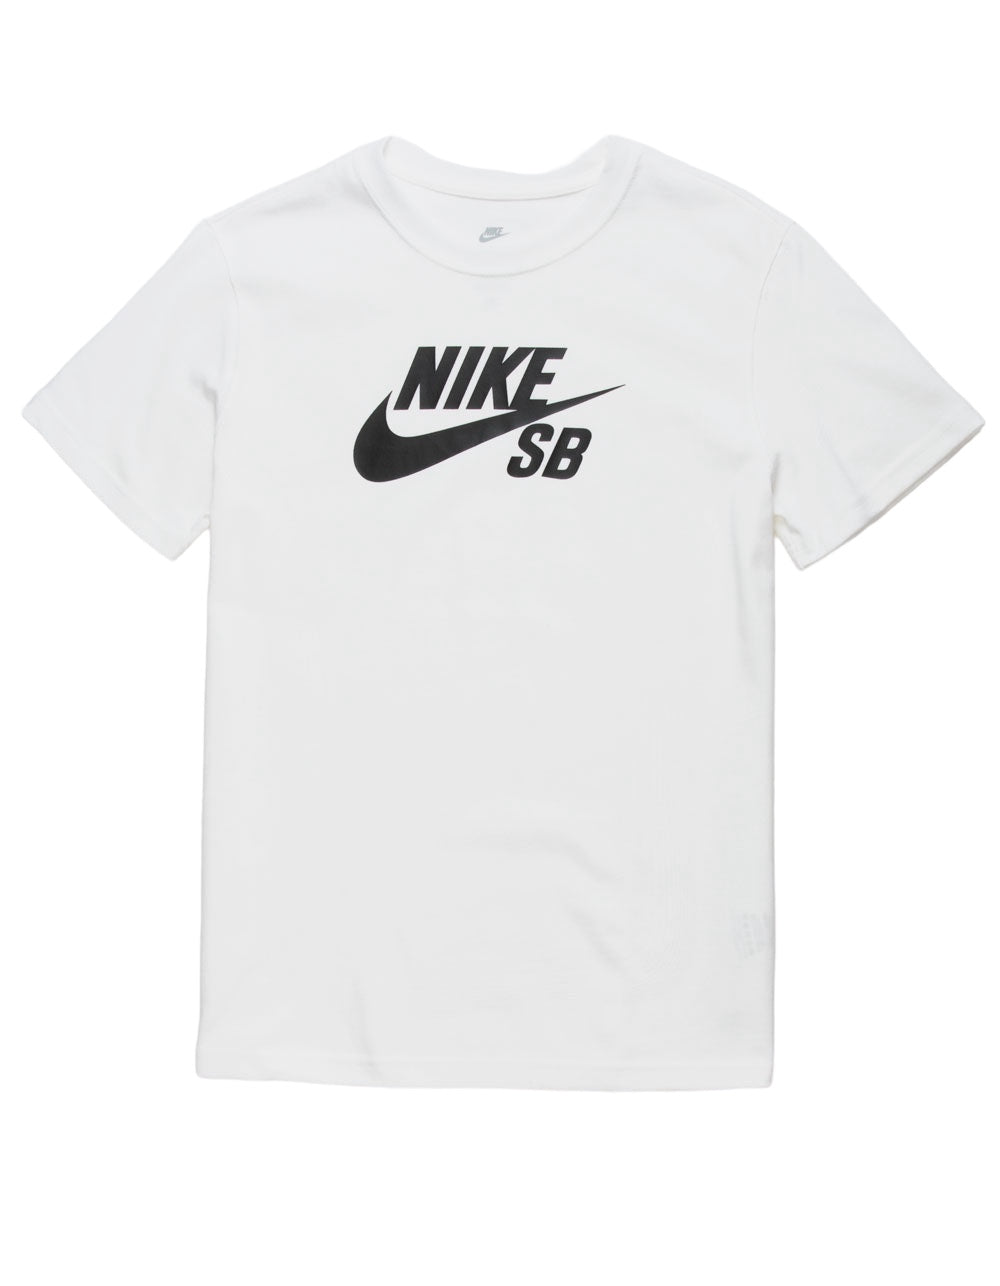 Nike SB S/S Tee